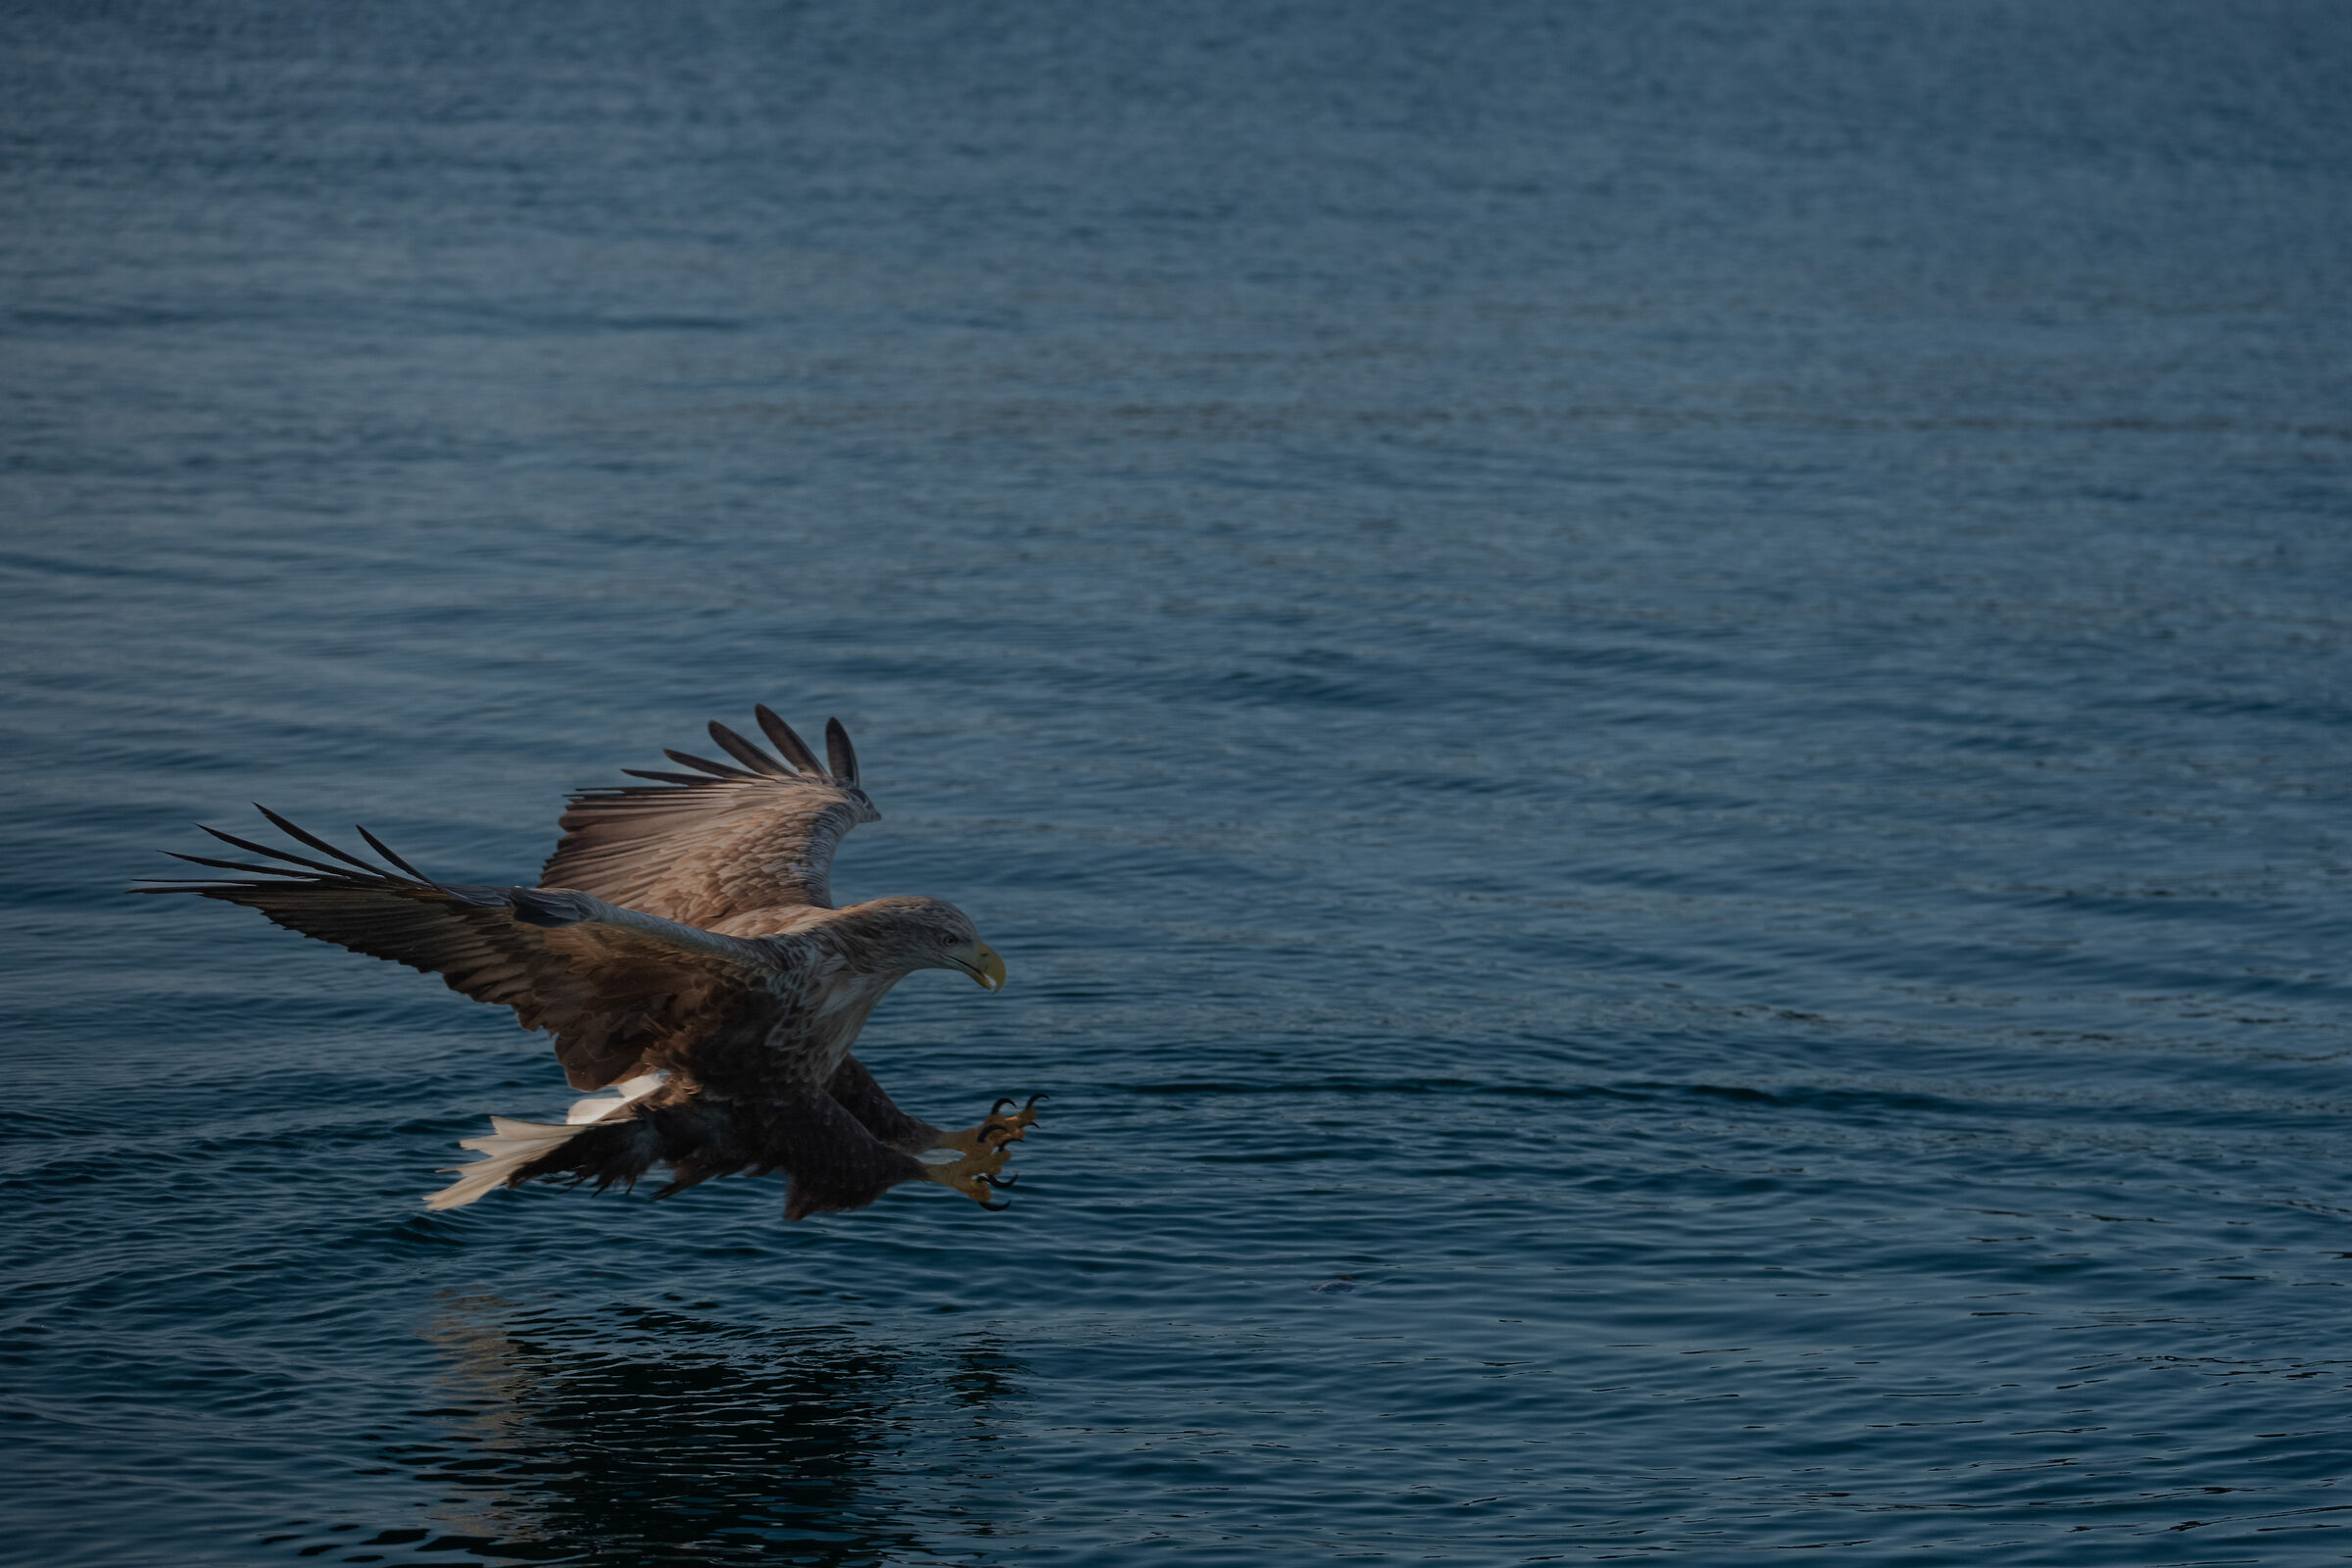 sea eagle on the hunt...